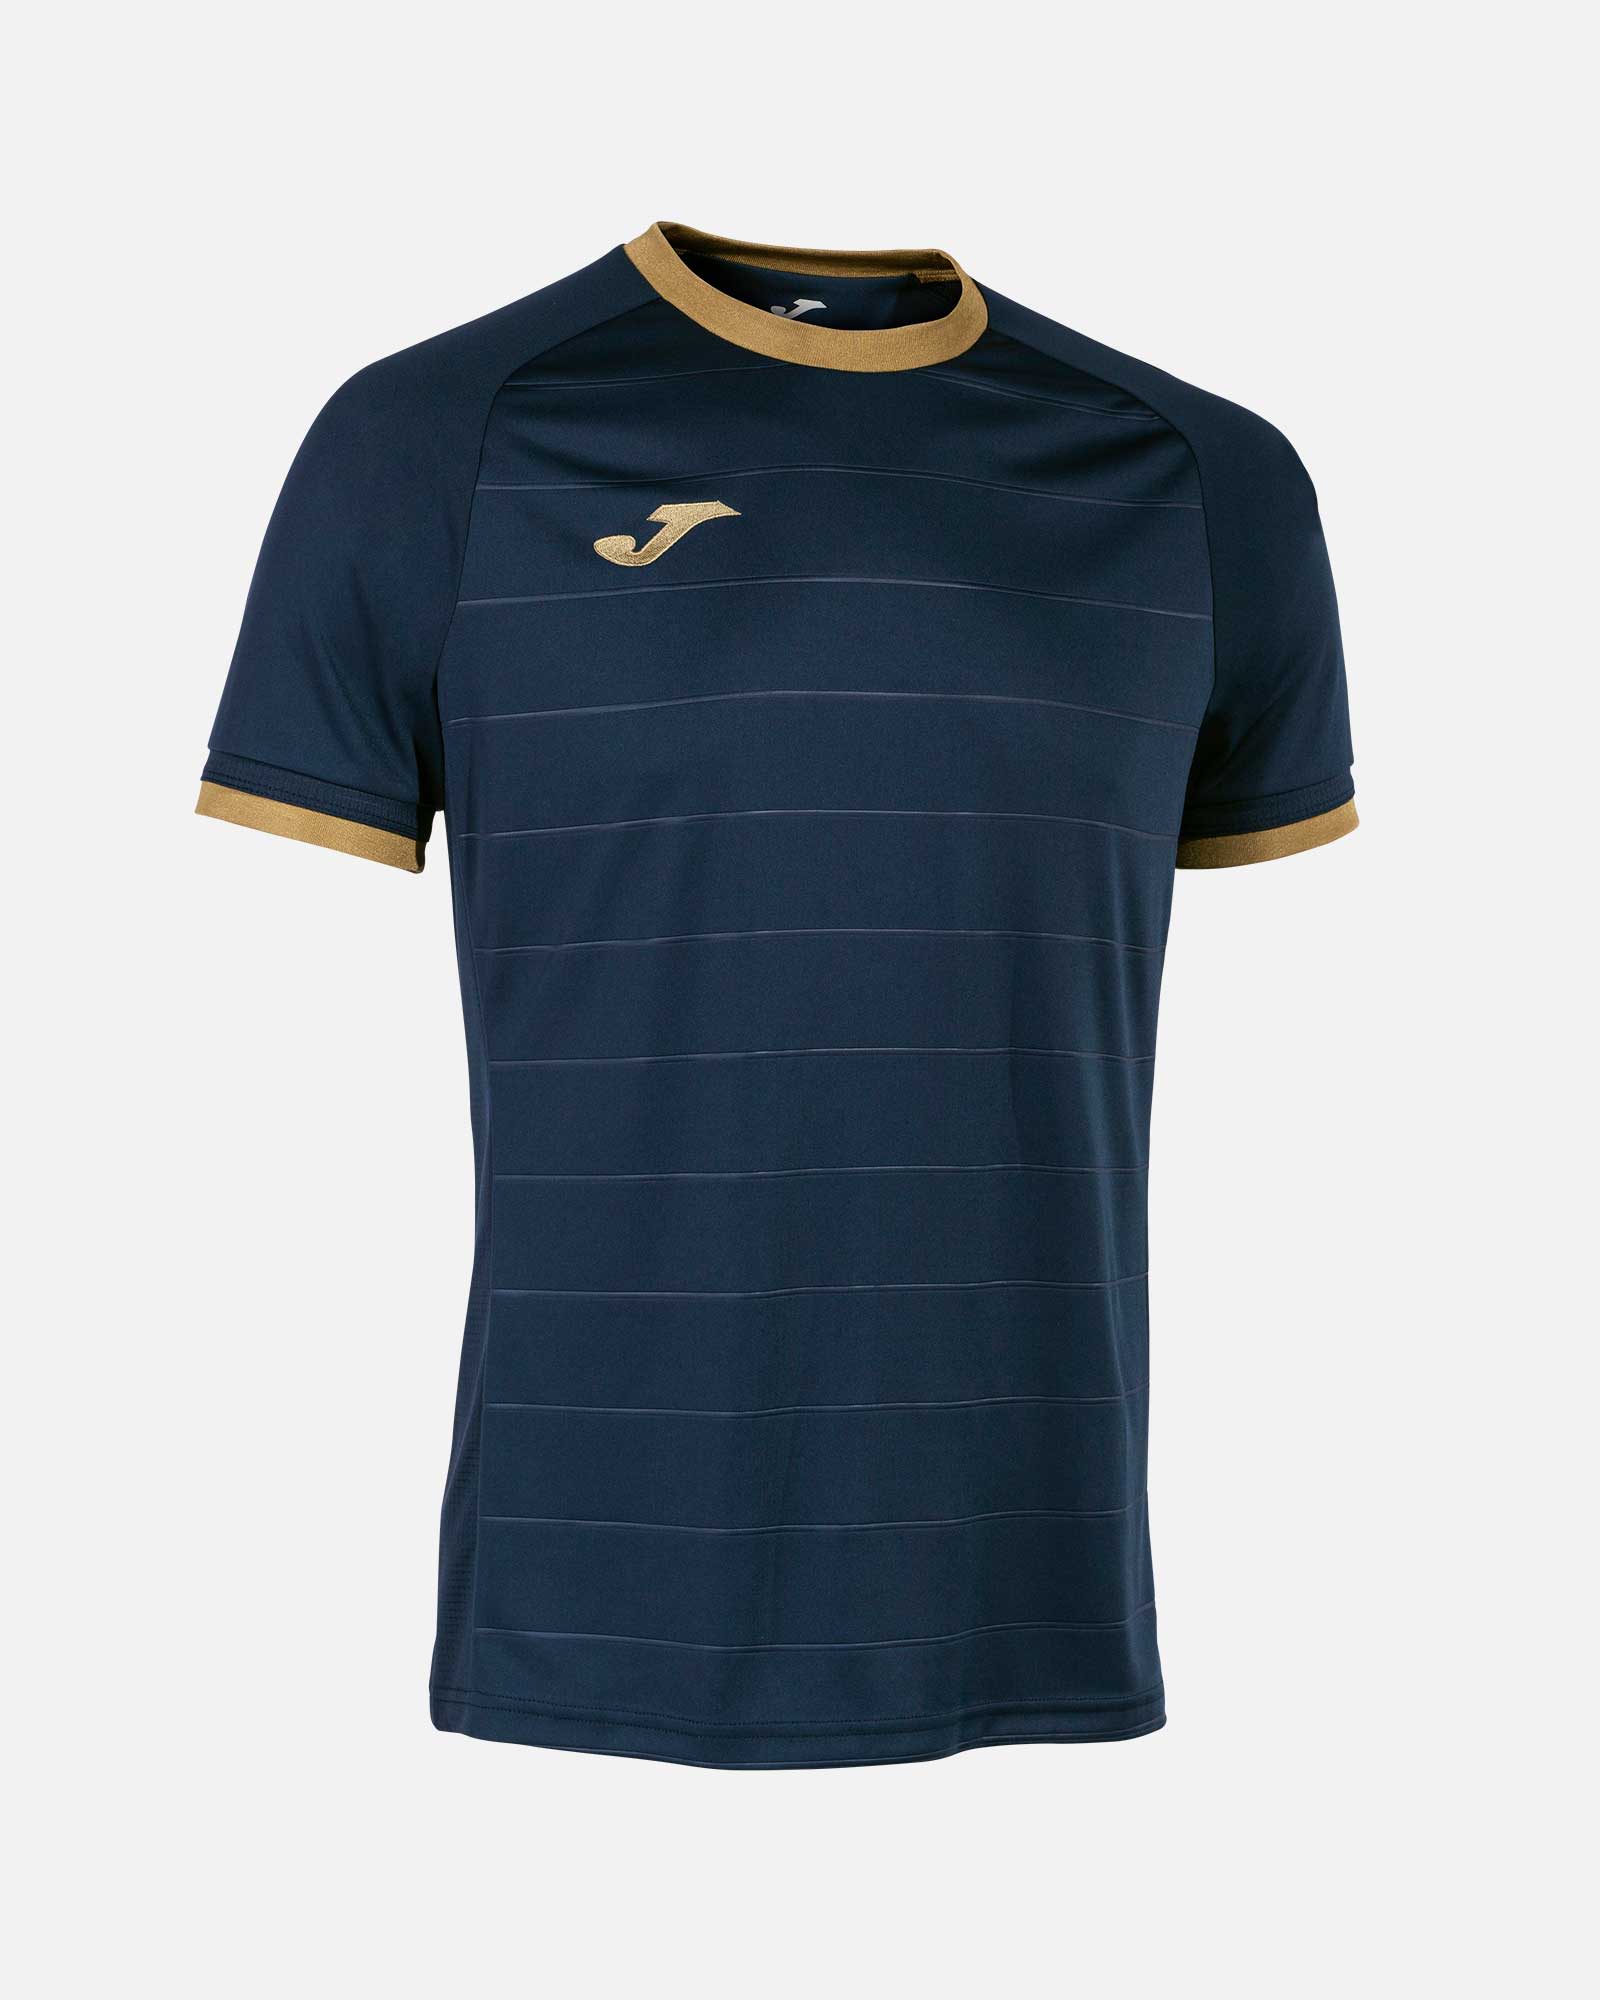 Camiseta Joma Gold V - Fútbol Factory